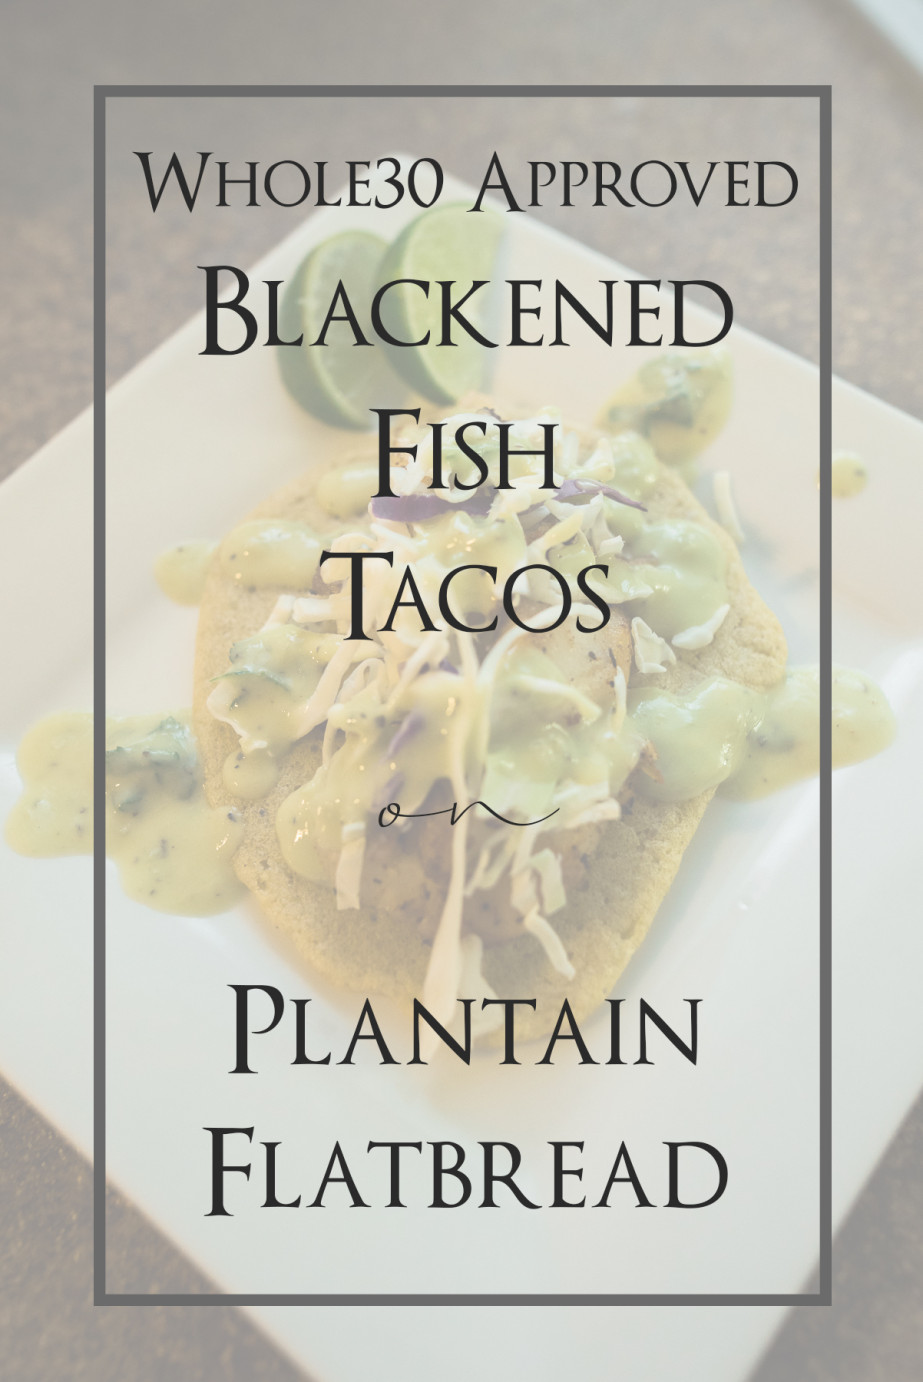 Blackened fish tacos on plantain flatbread